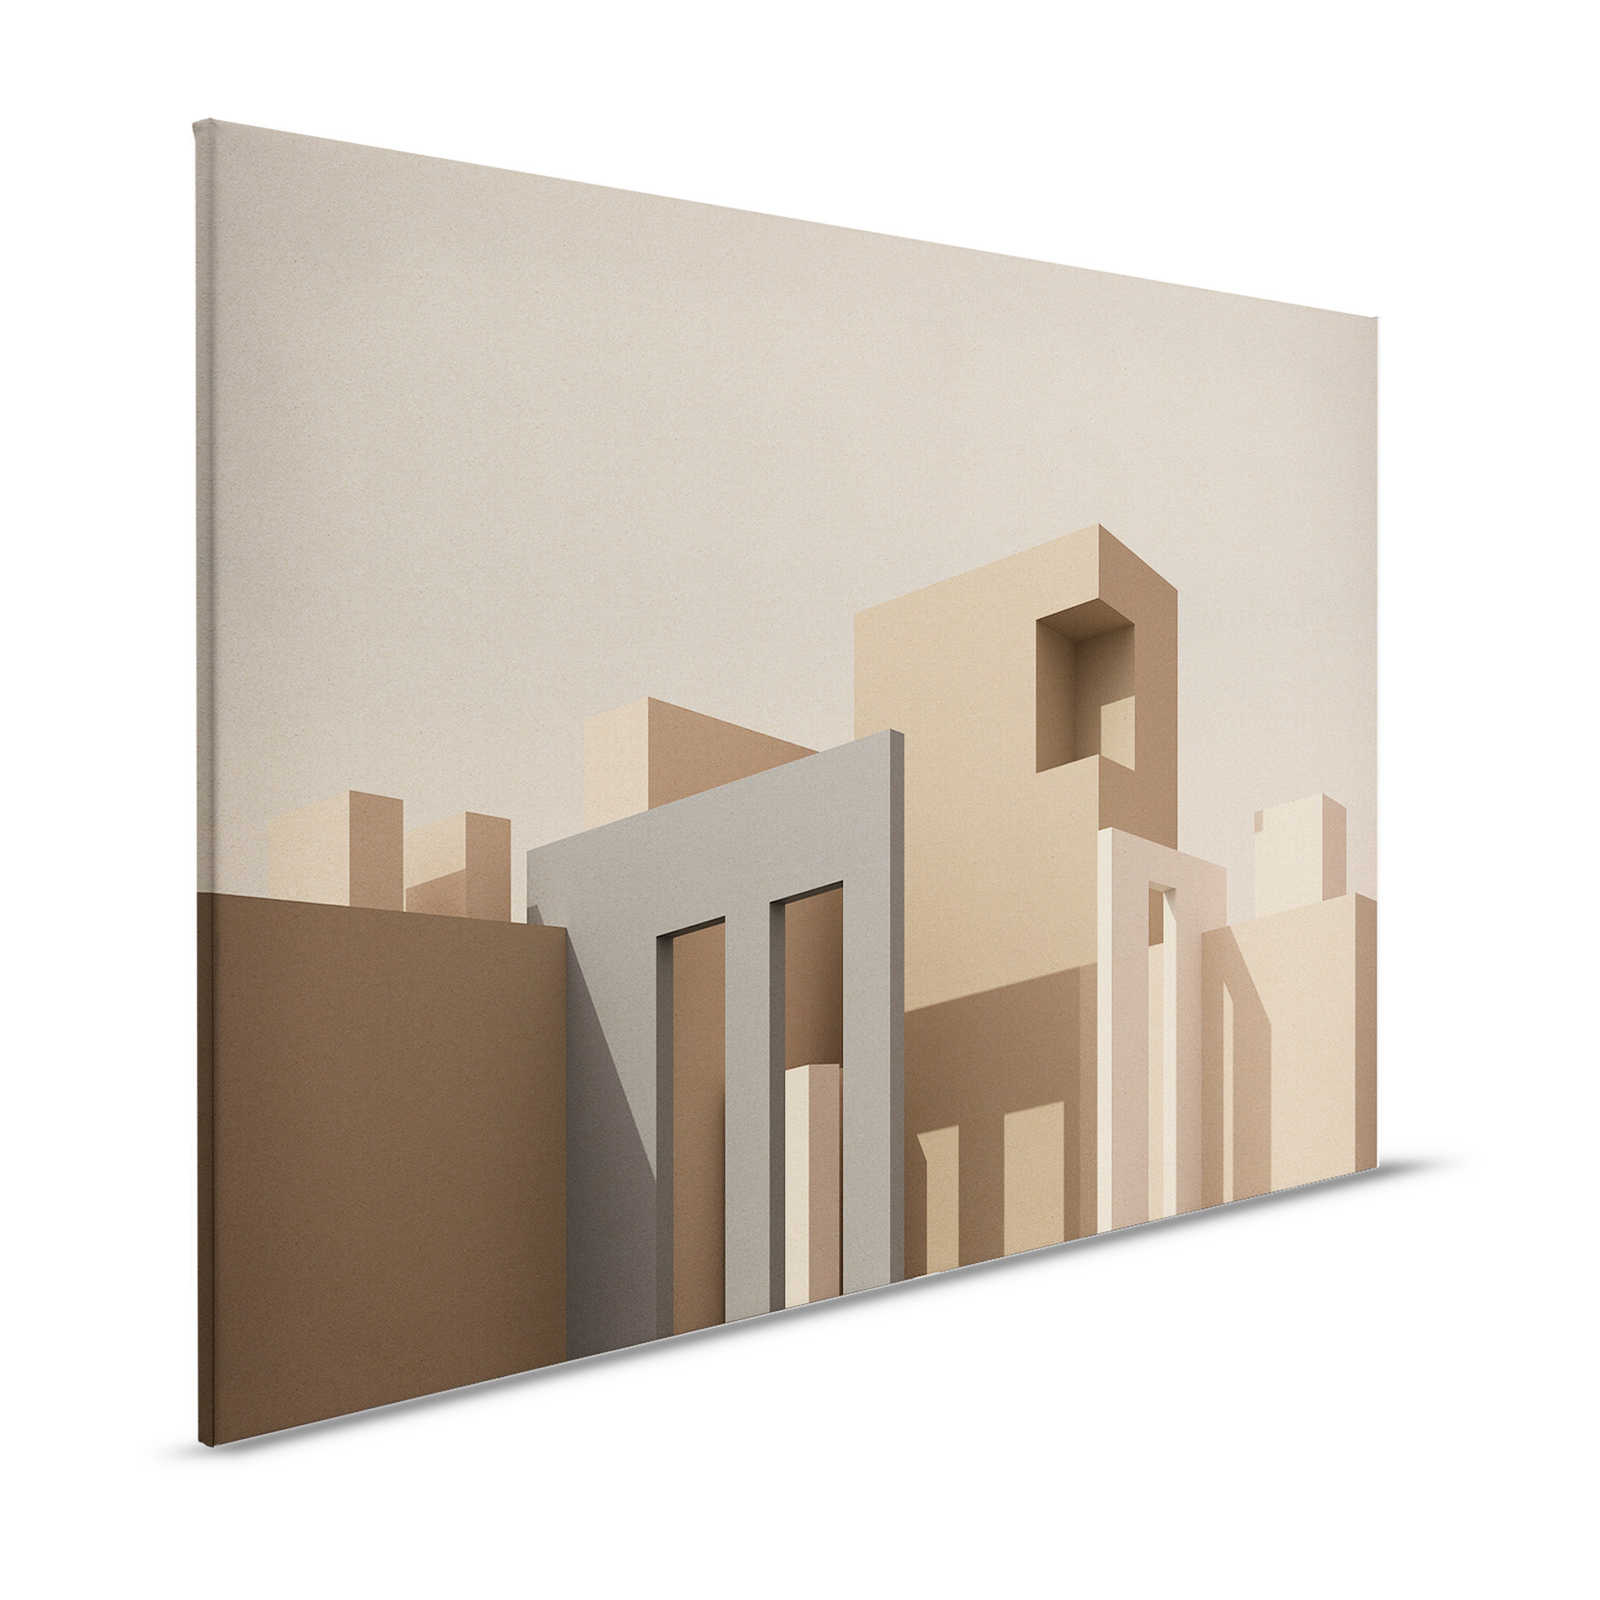 Tanger 1 - Leinwandbild Architektur Cube Design in Beige & Grau – 1,20 m x 0,80 m
